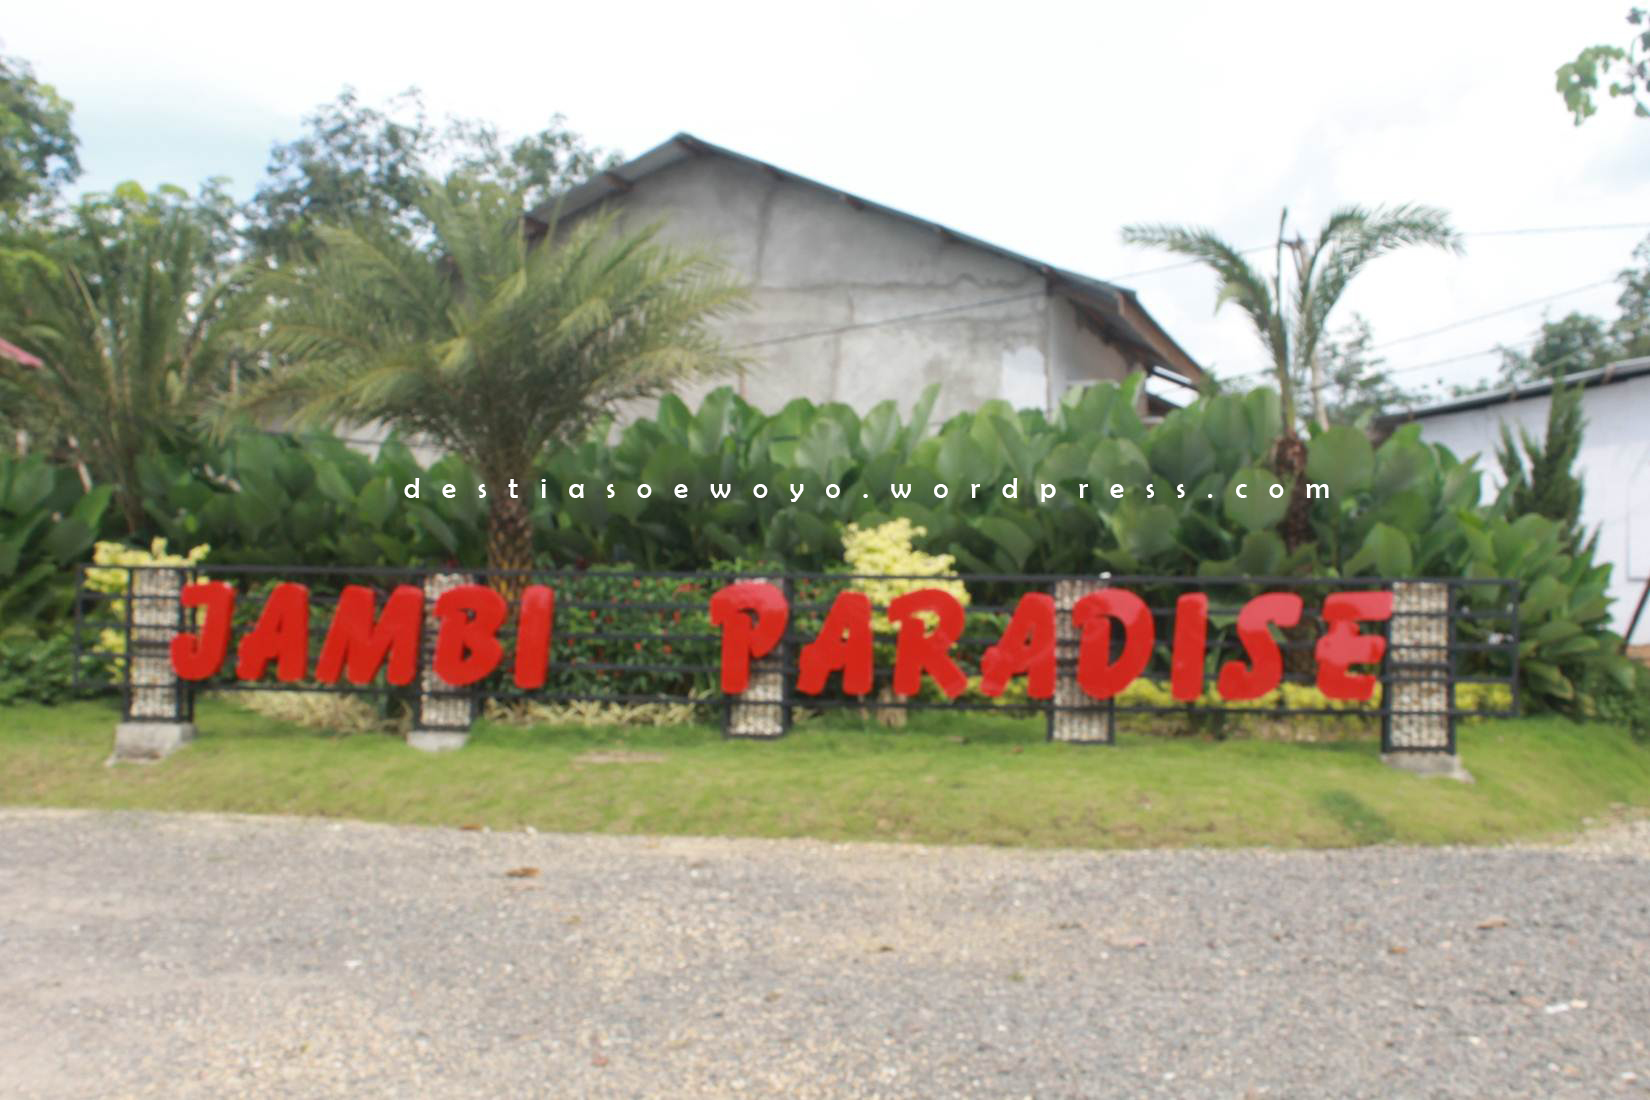 Jambi Paradise Wisata Taman Jambi Explore Jambi ArchitectureDiary